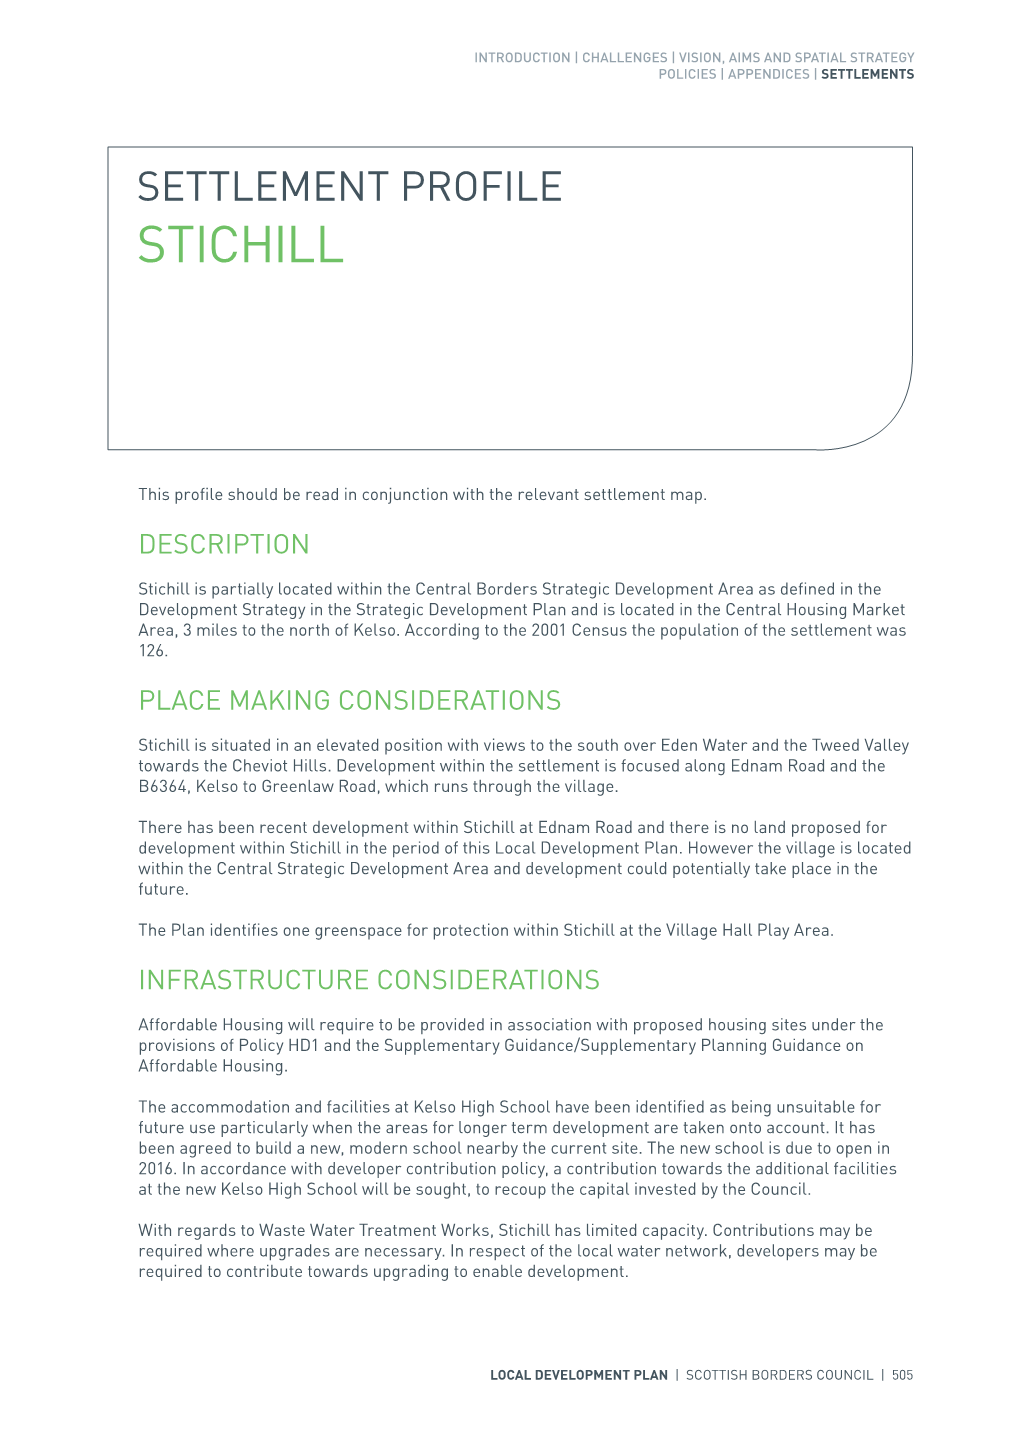 Settlement Profile Stichill